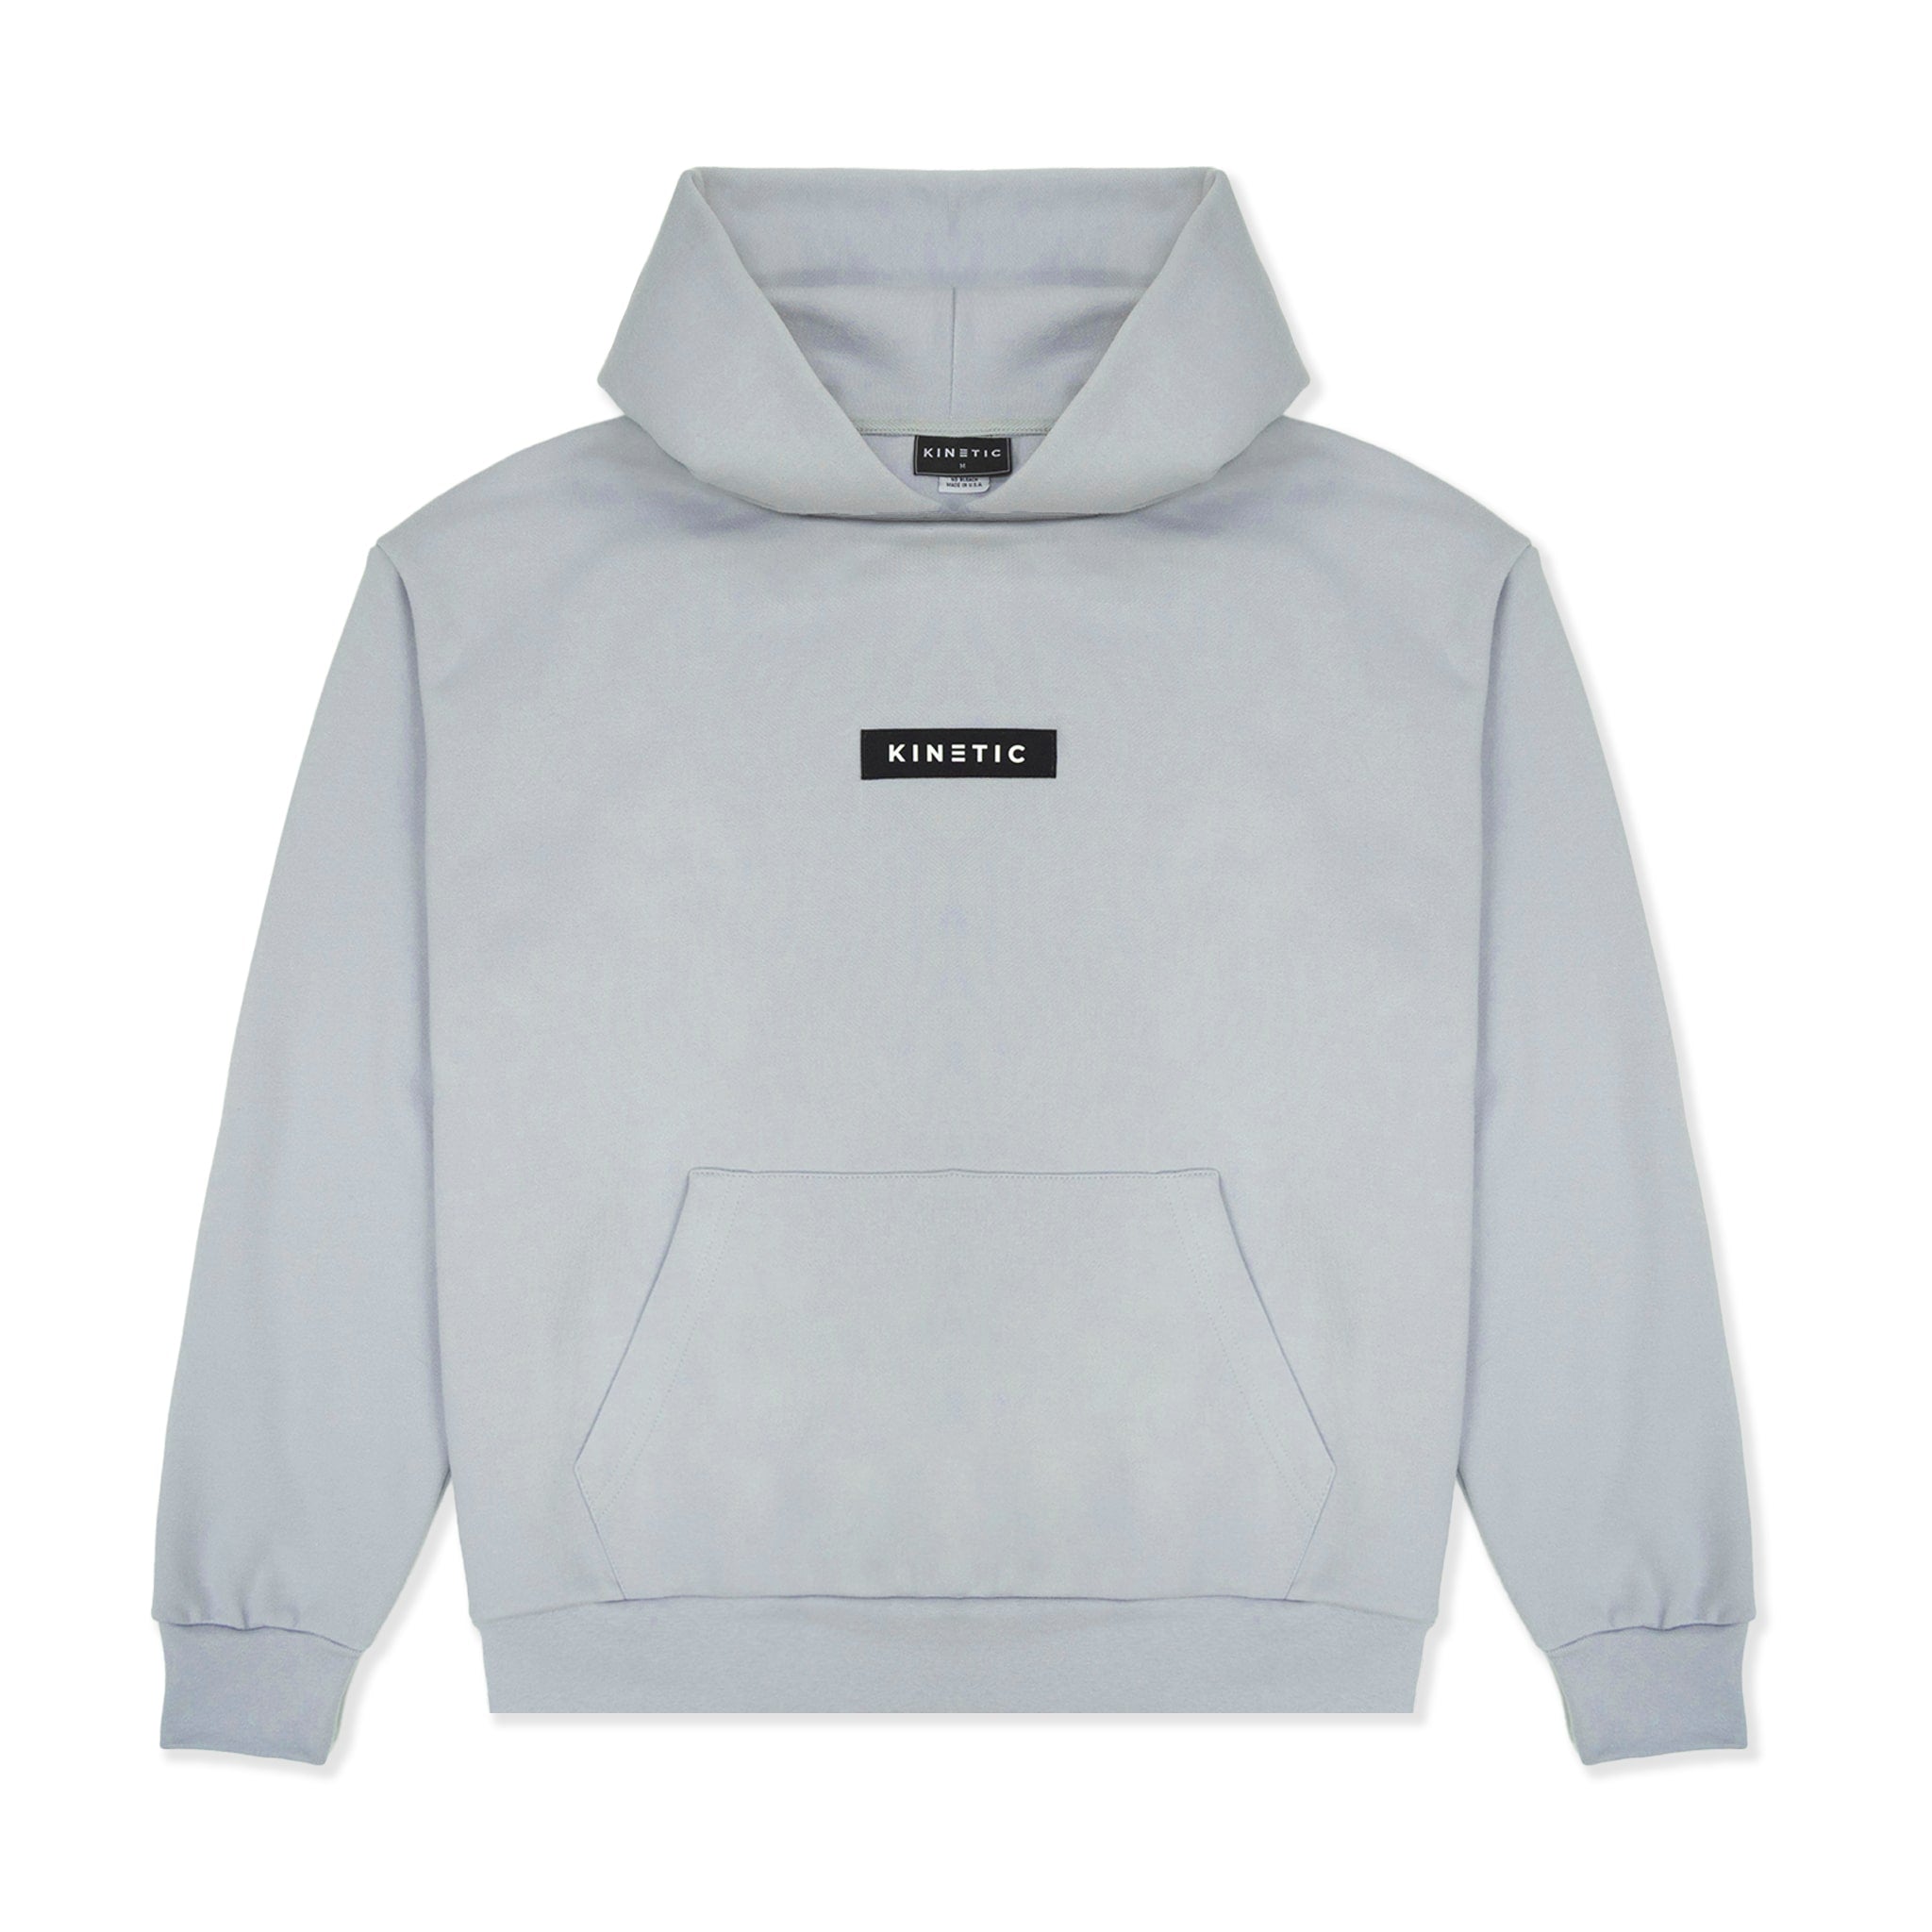 Hollister logo front hoodie in light grey